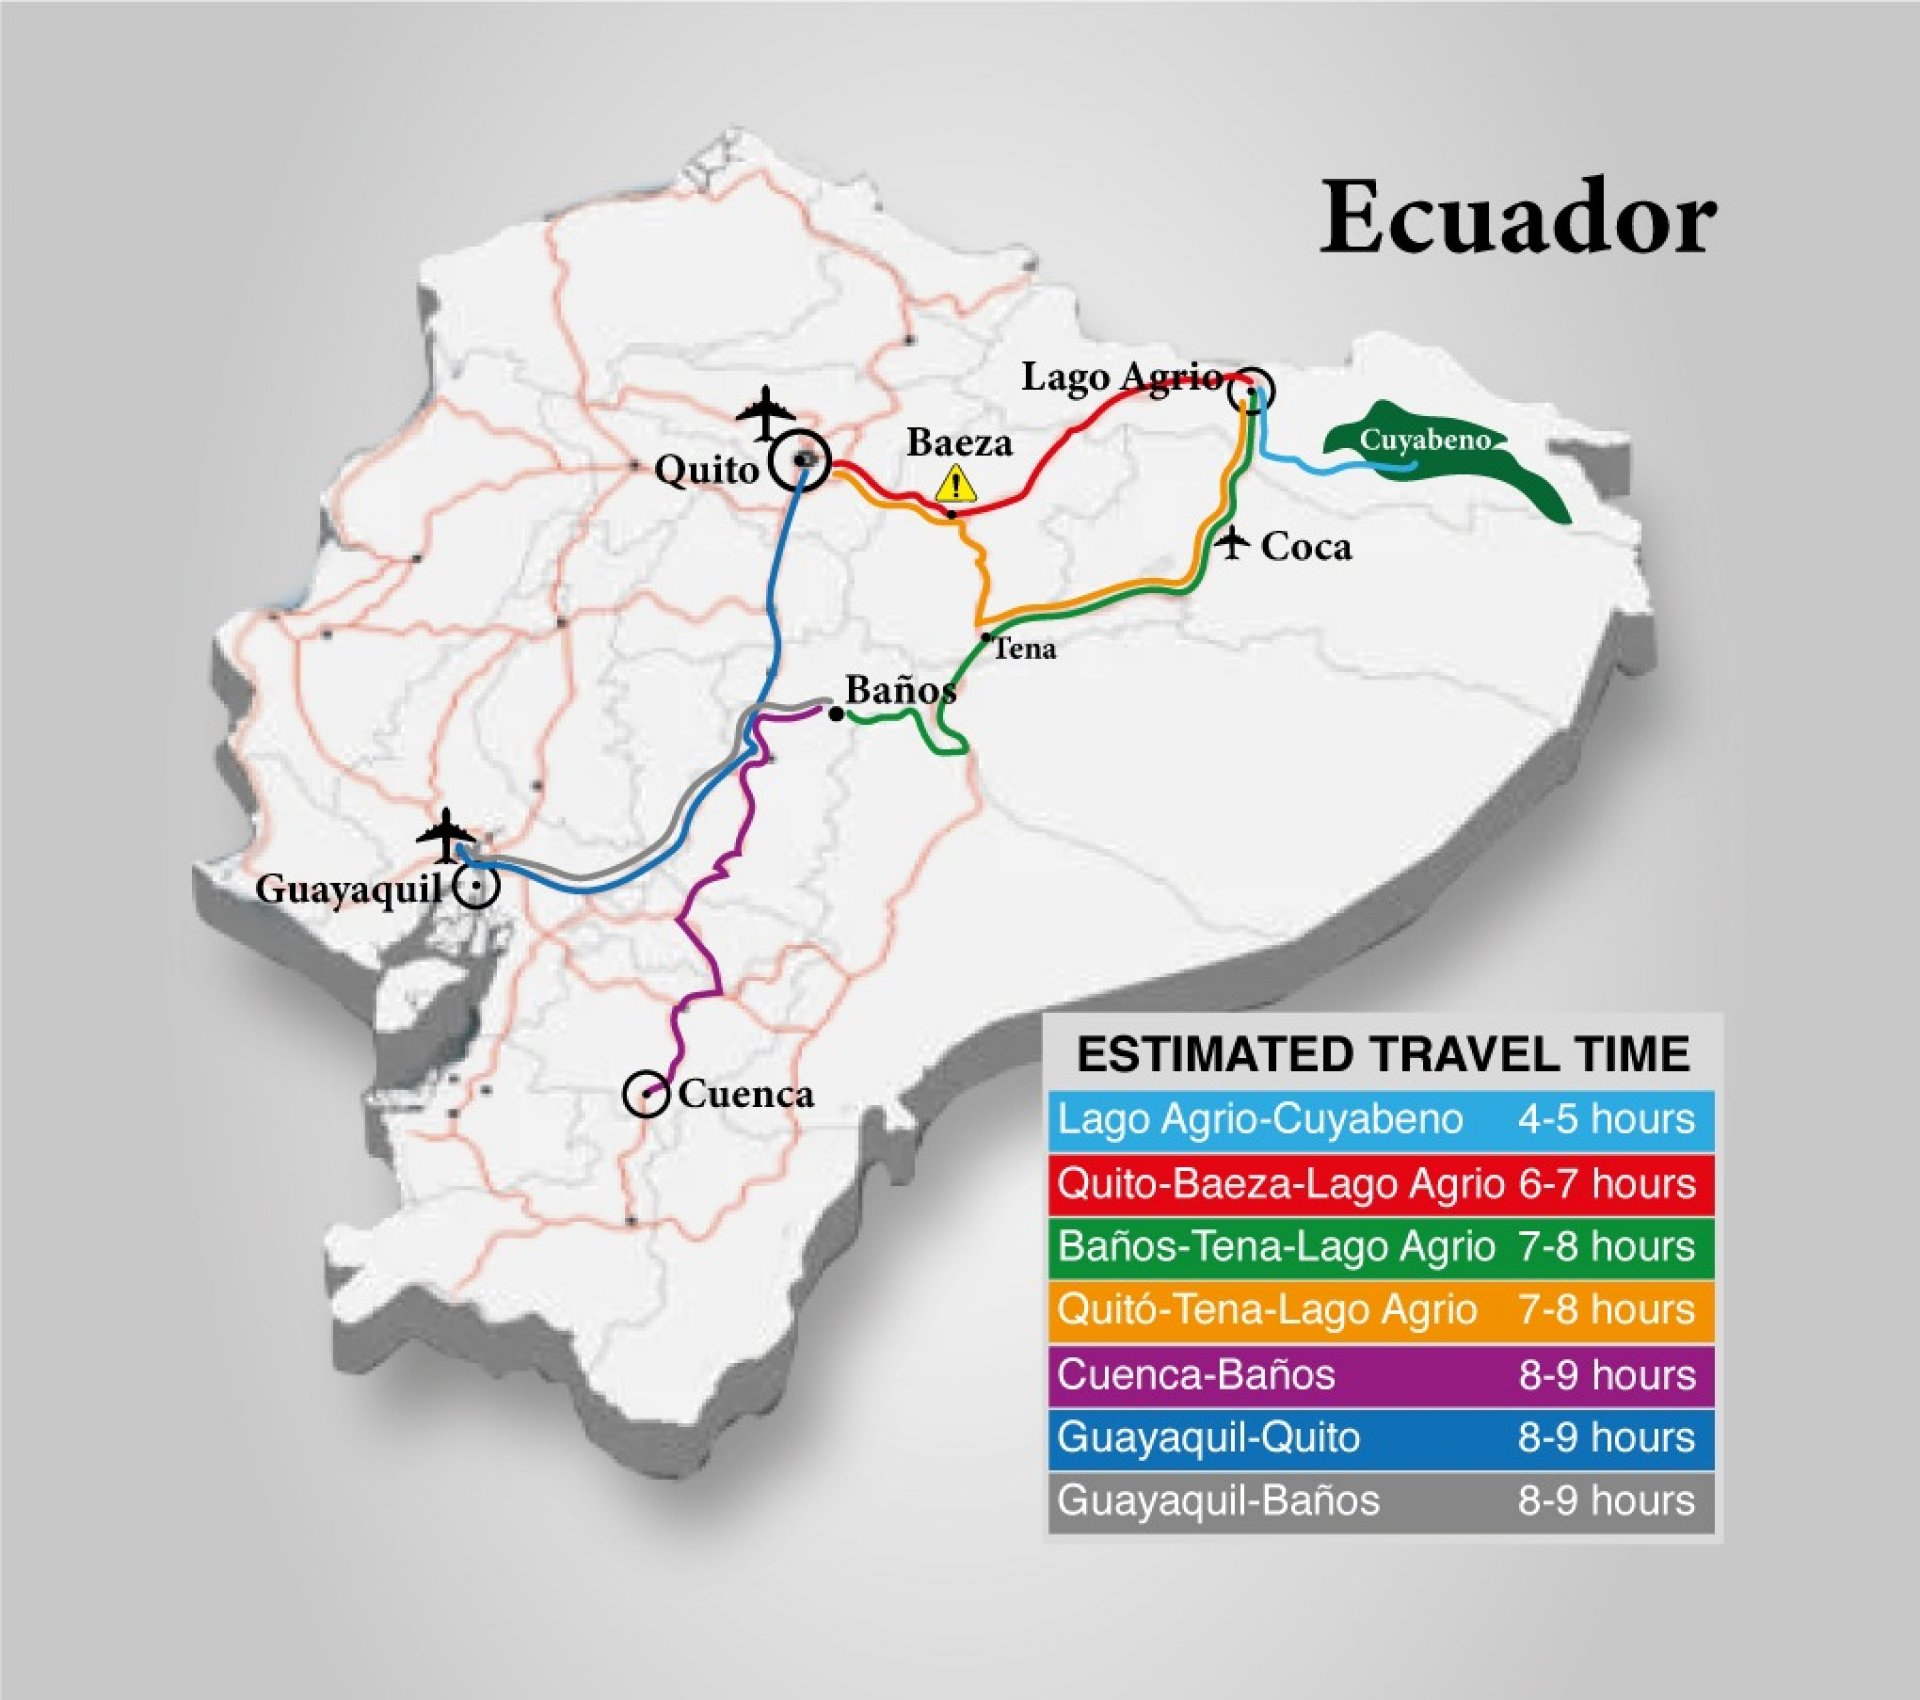 �C�mo llegar a Lago Agrio (Cuyabeno) desde Guayaquil?